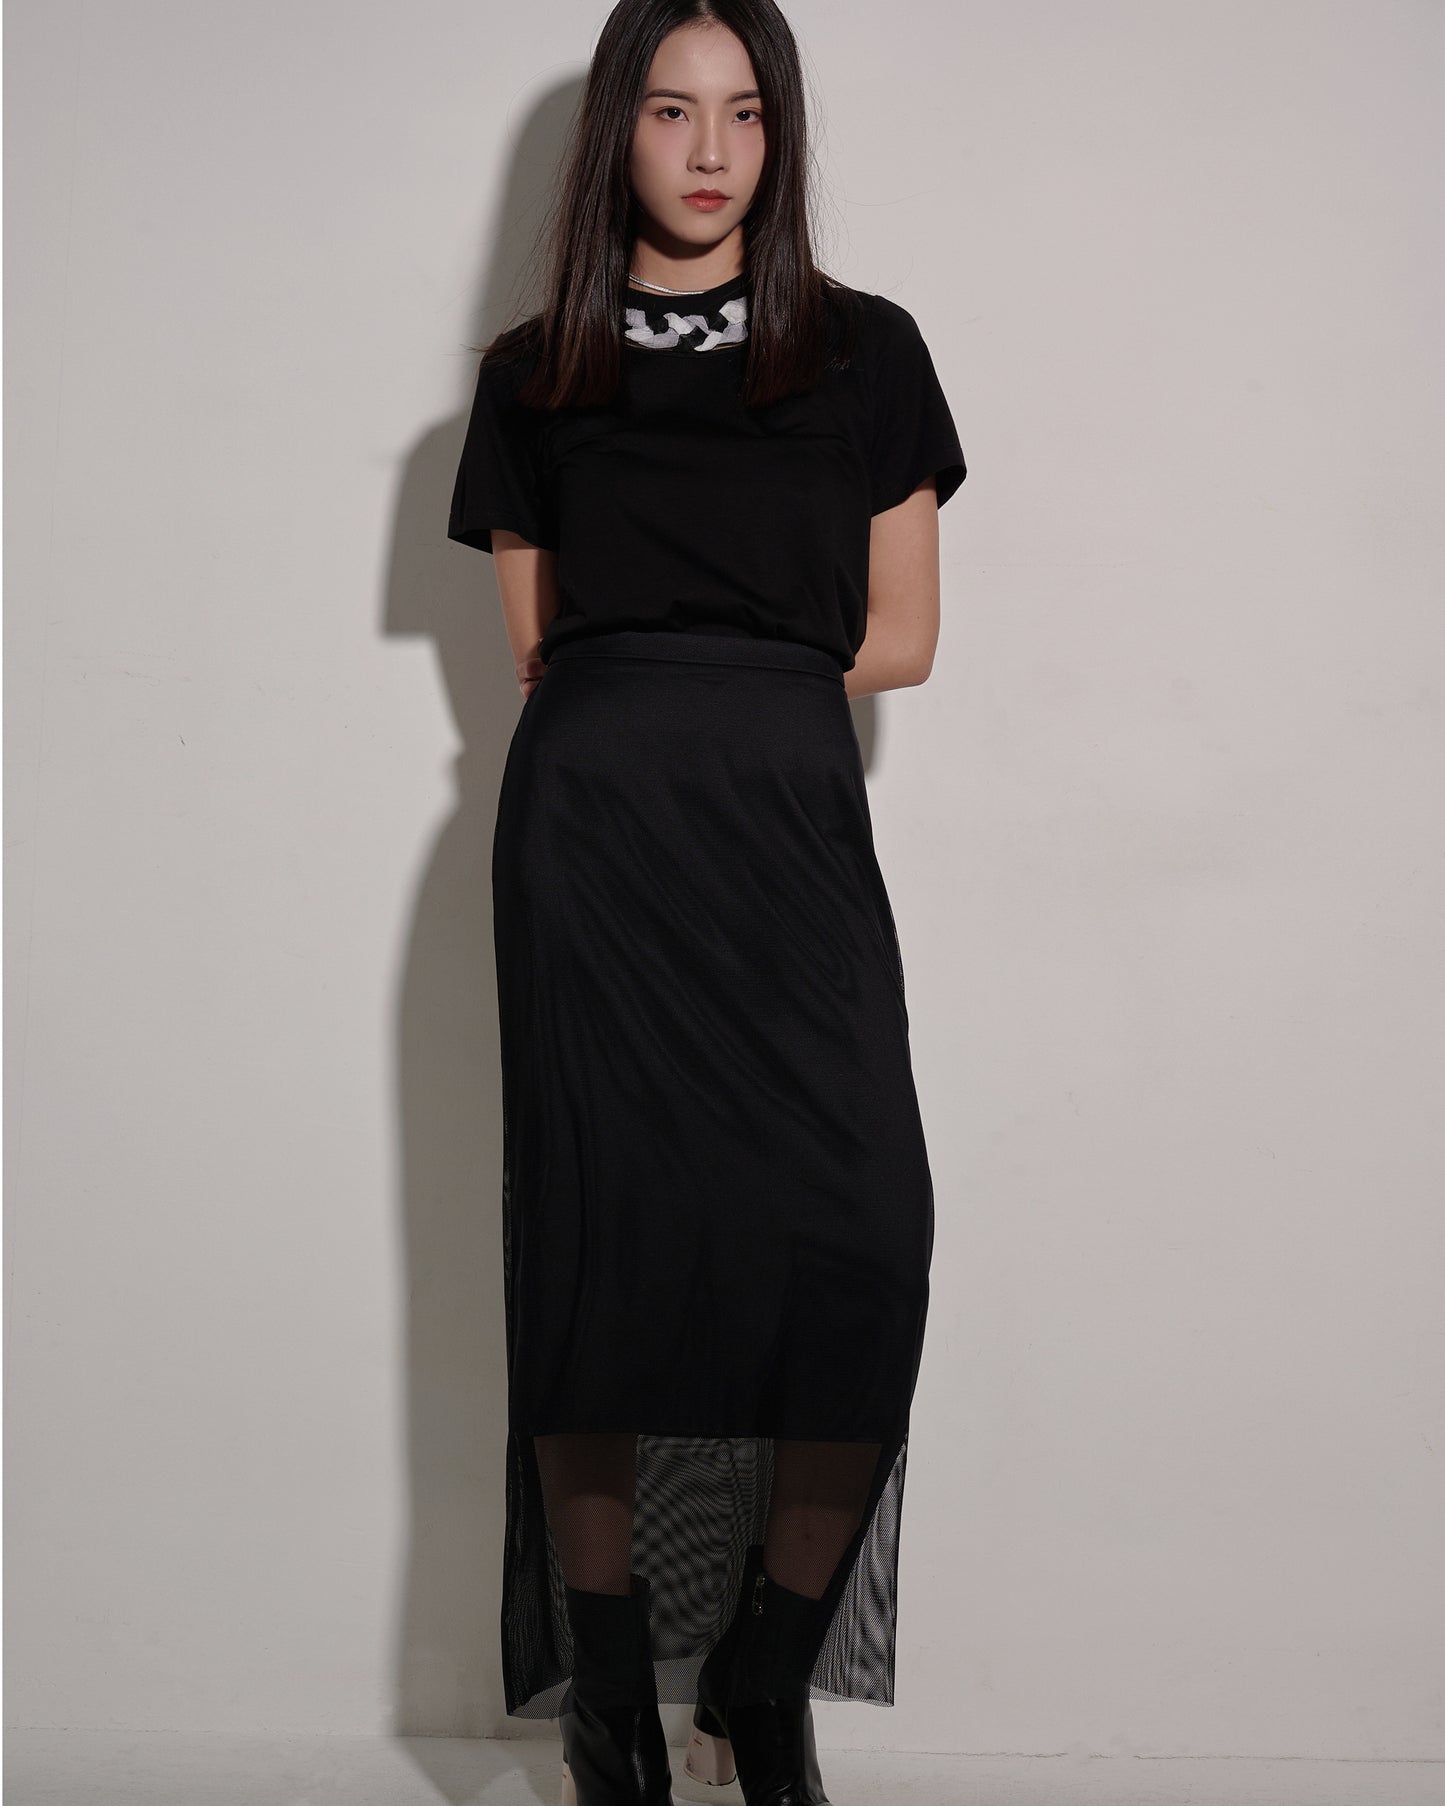 aalis DIMONA mesh skirt (Black)